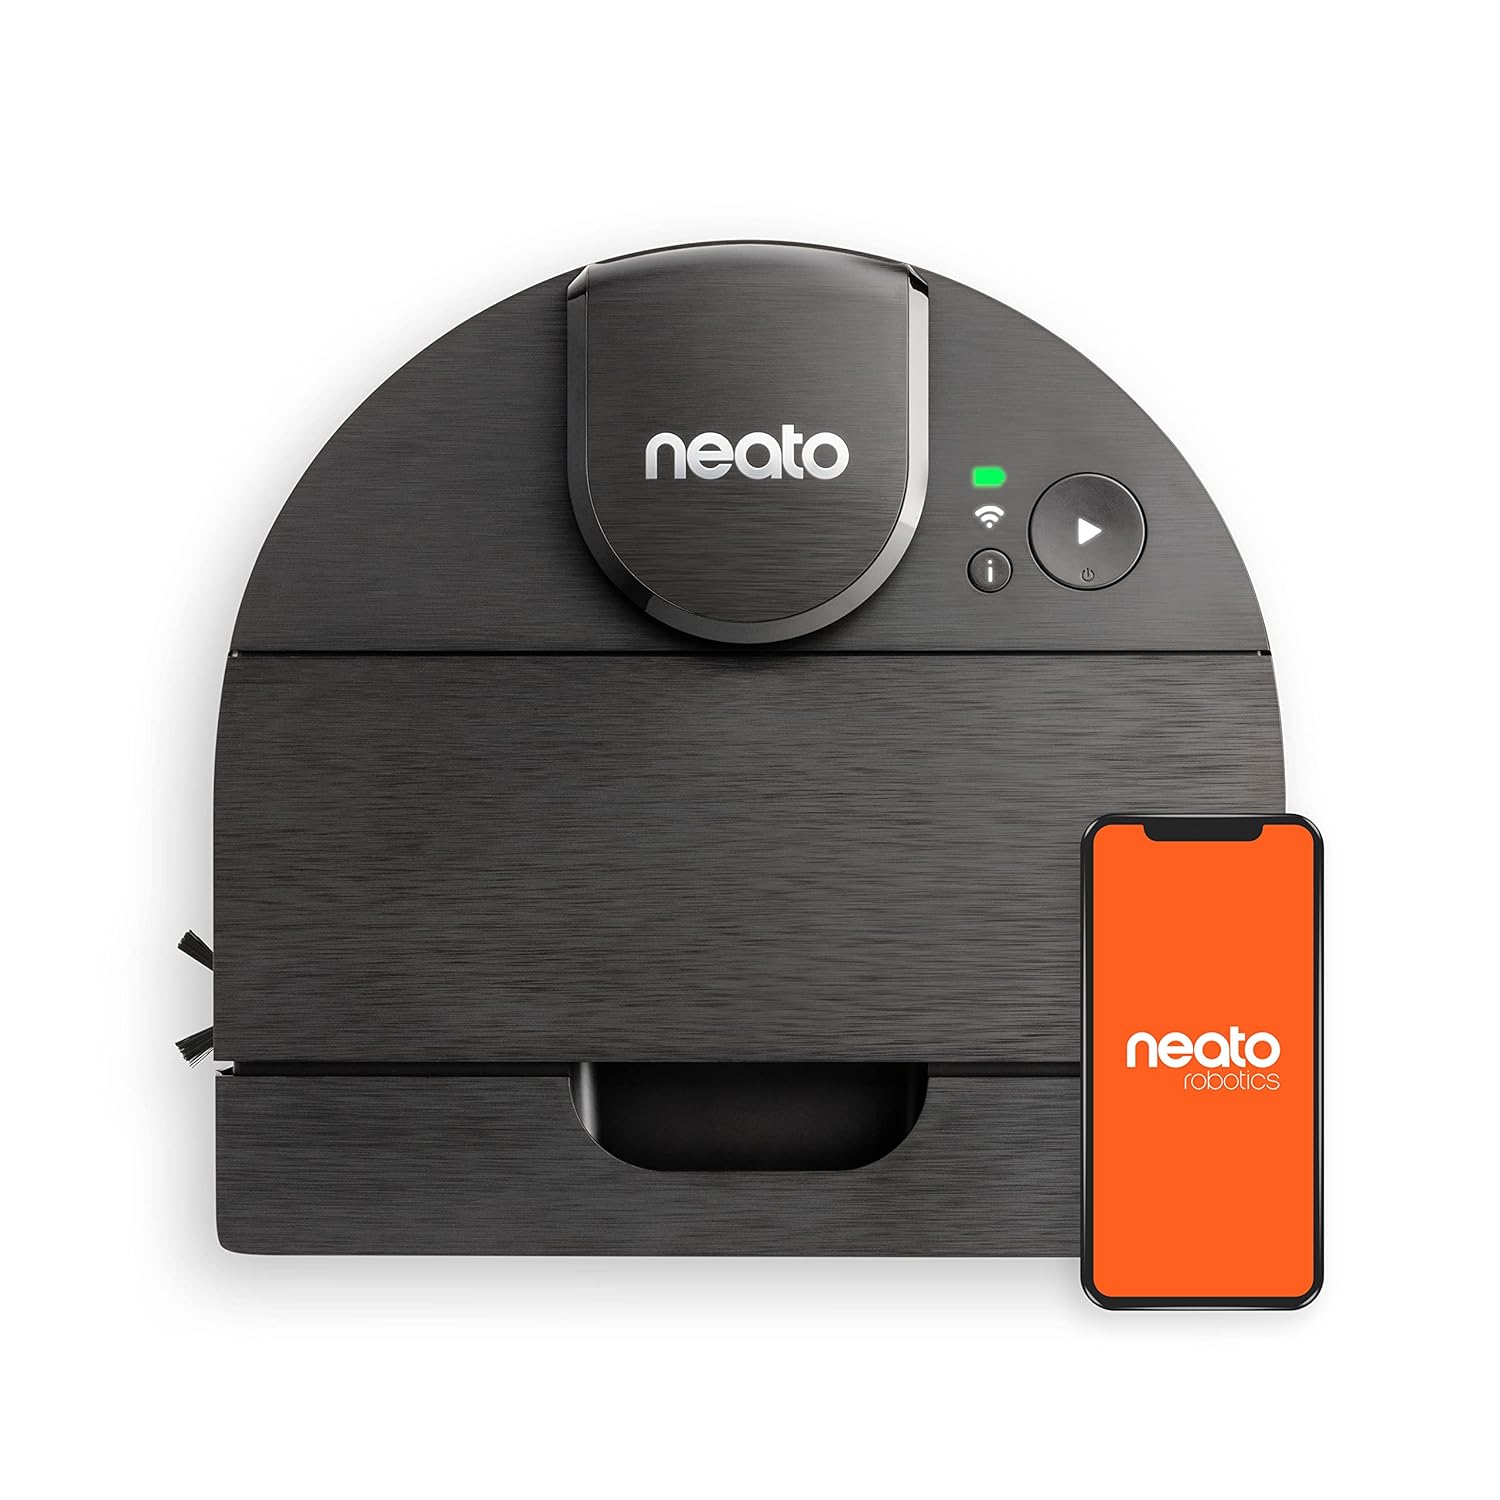 Neato D9 Intelligent Robot Vacuum - $300